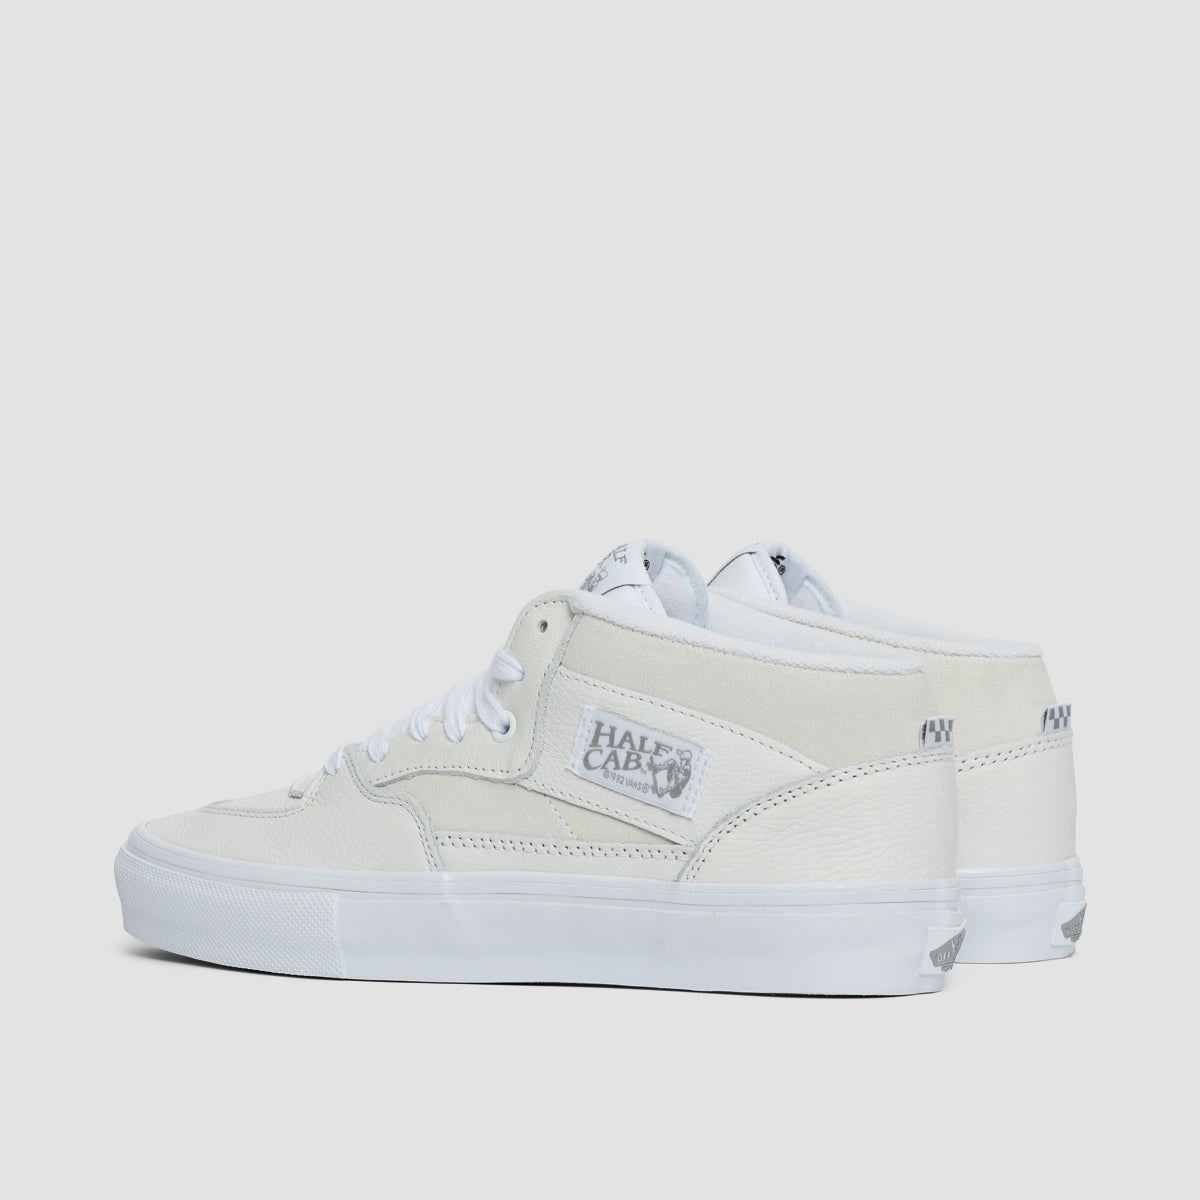 Vans Skate Half Cab Mid Top Shoes - Daz White/White